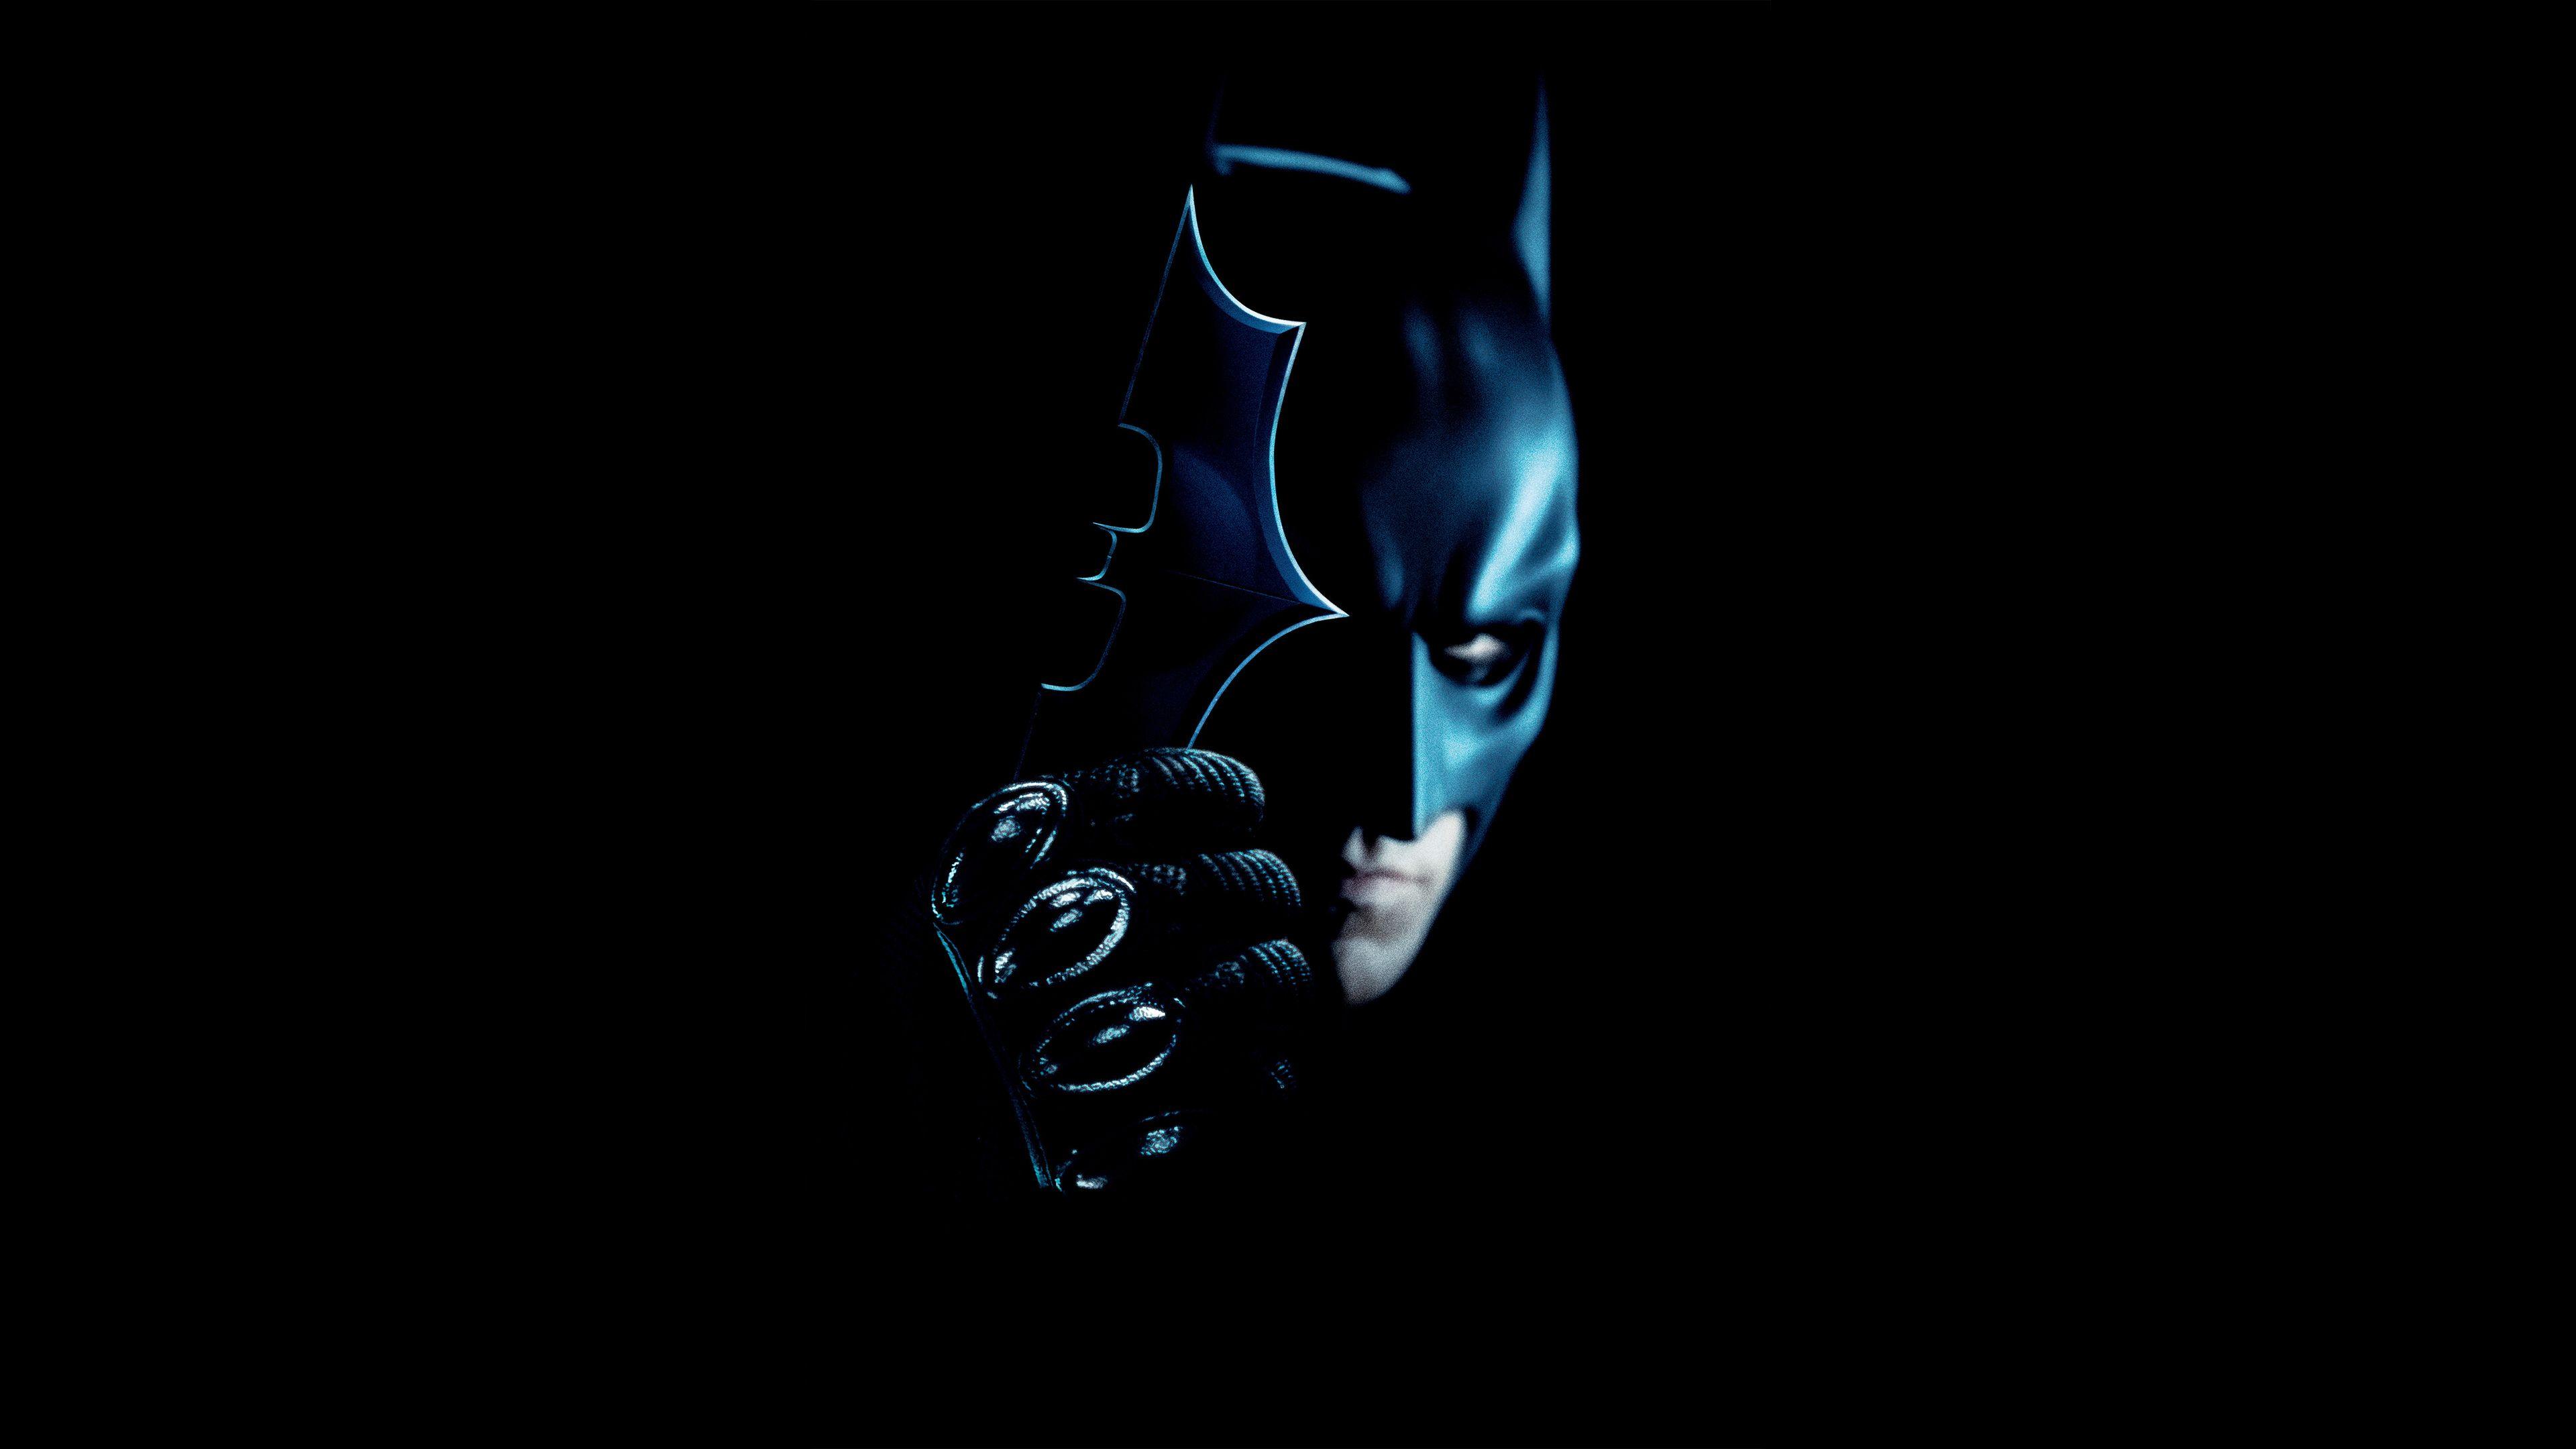 The Dark Knight 5k superheroes .com